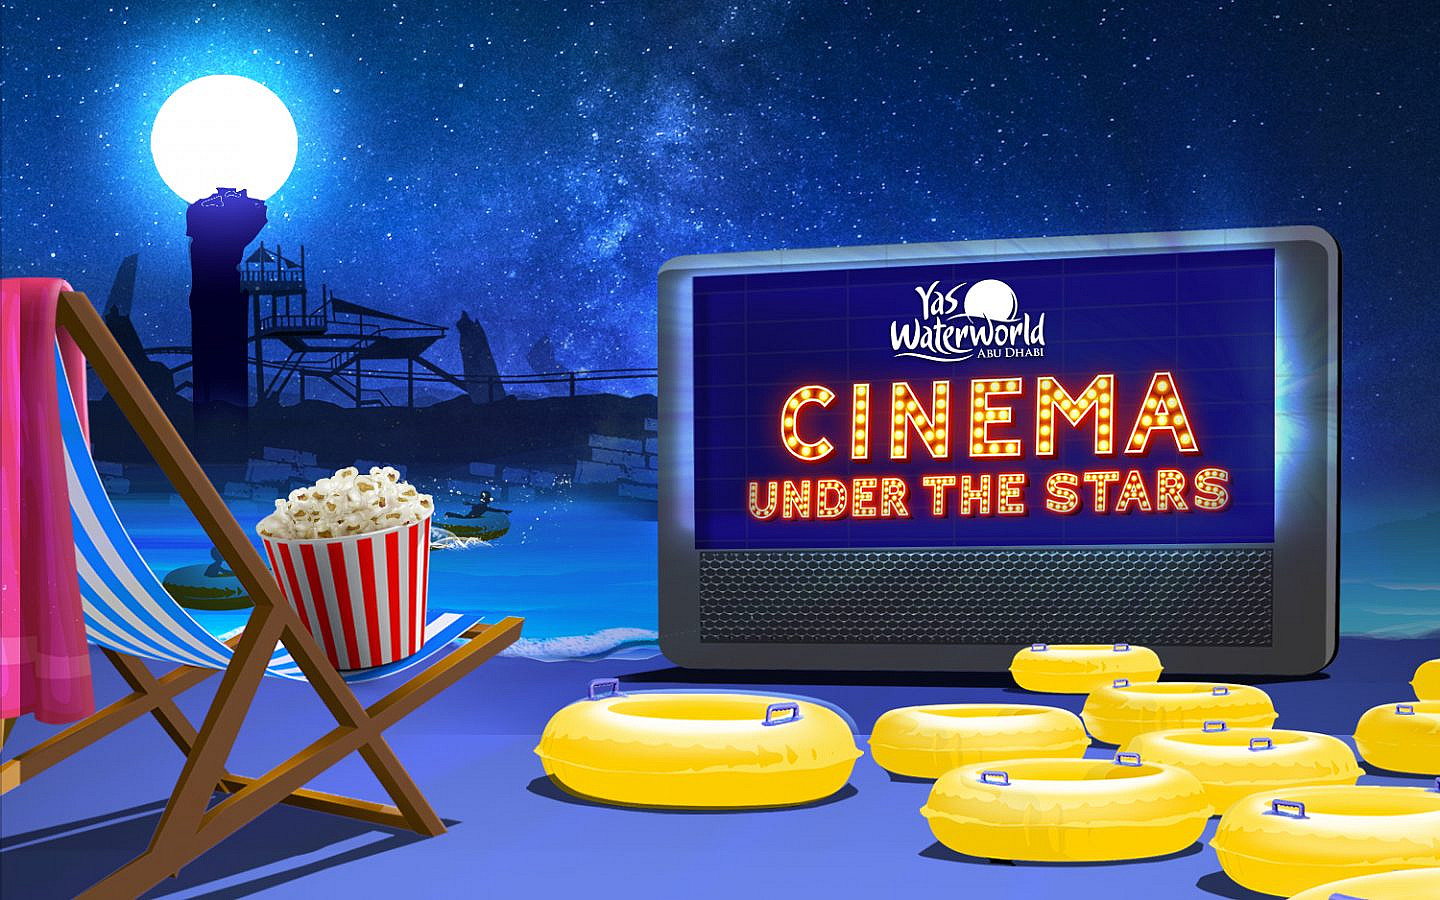 Yas Waterworld brings back Cinema Under the Stars with a Superhero Twist